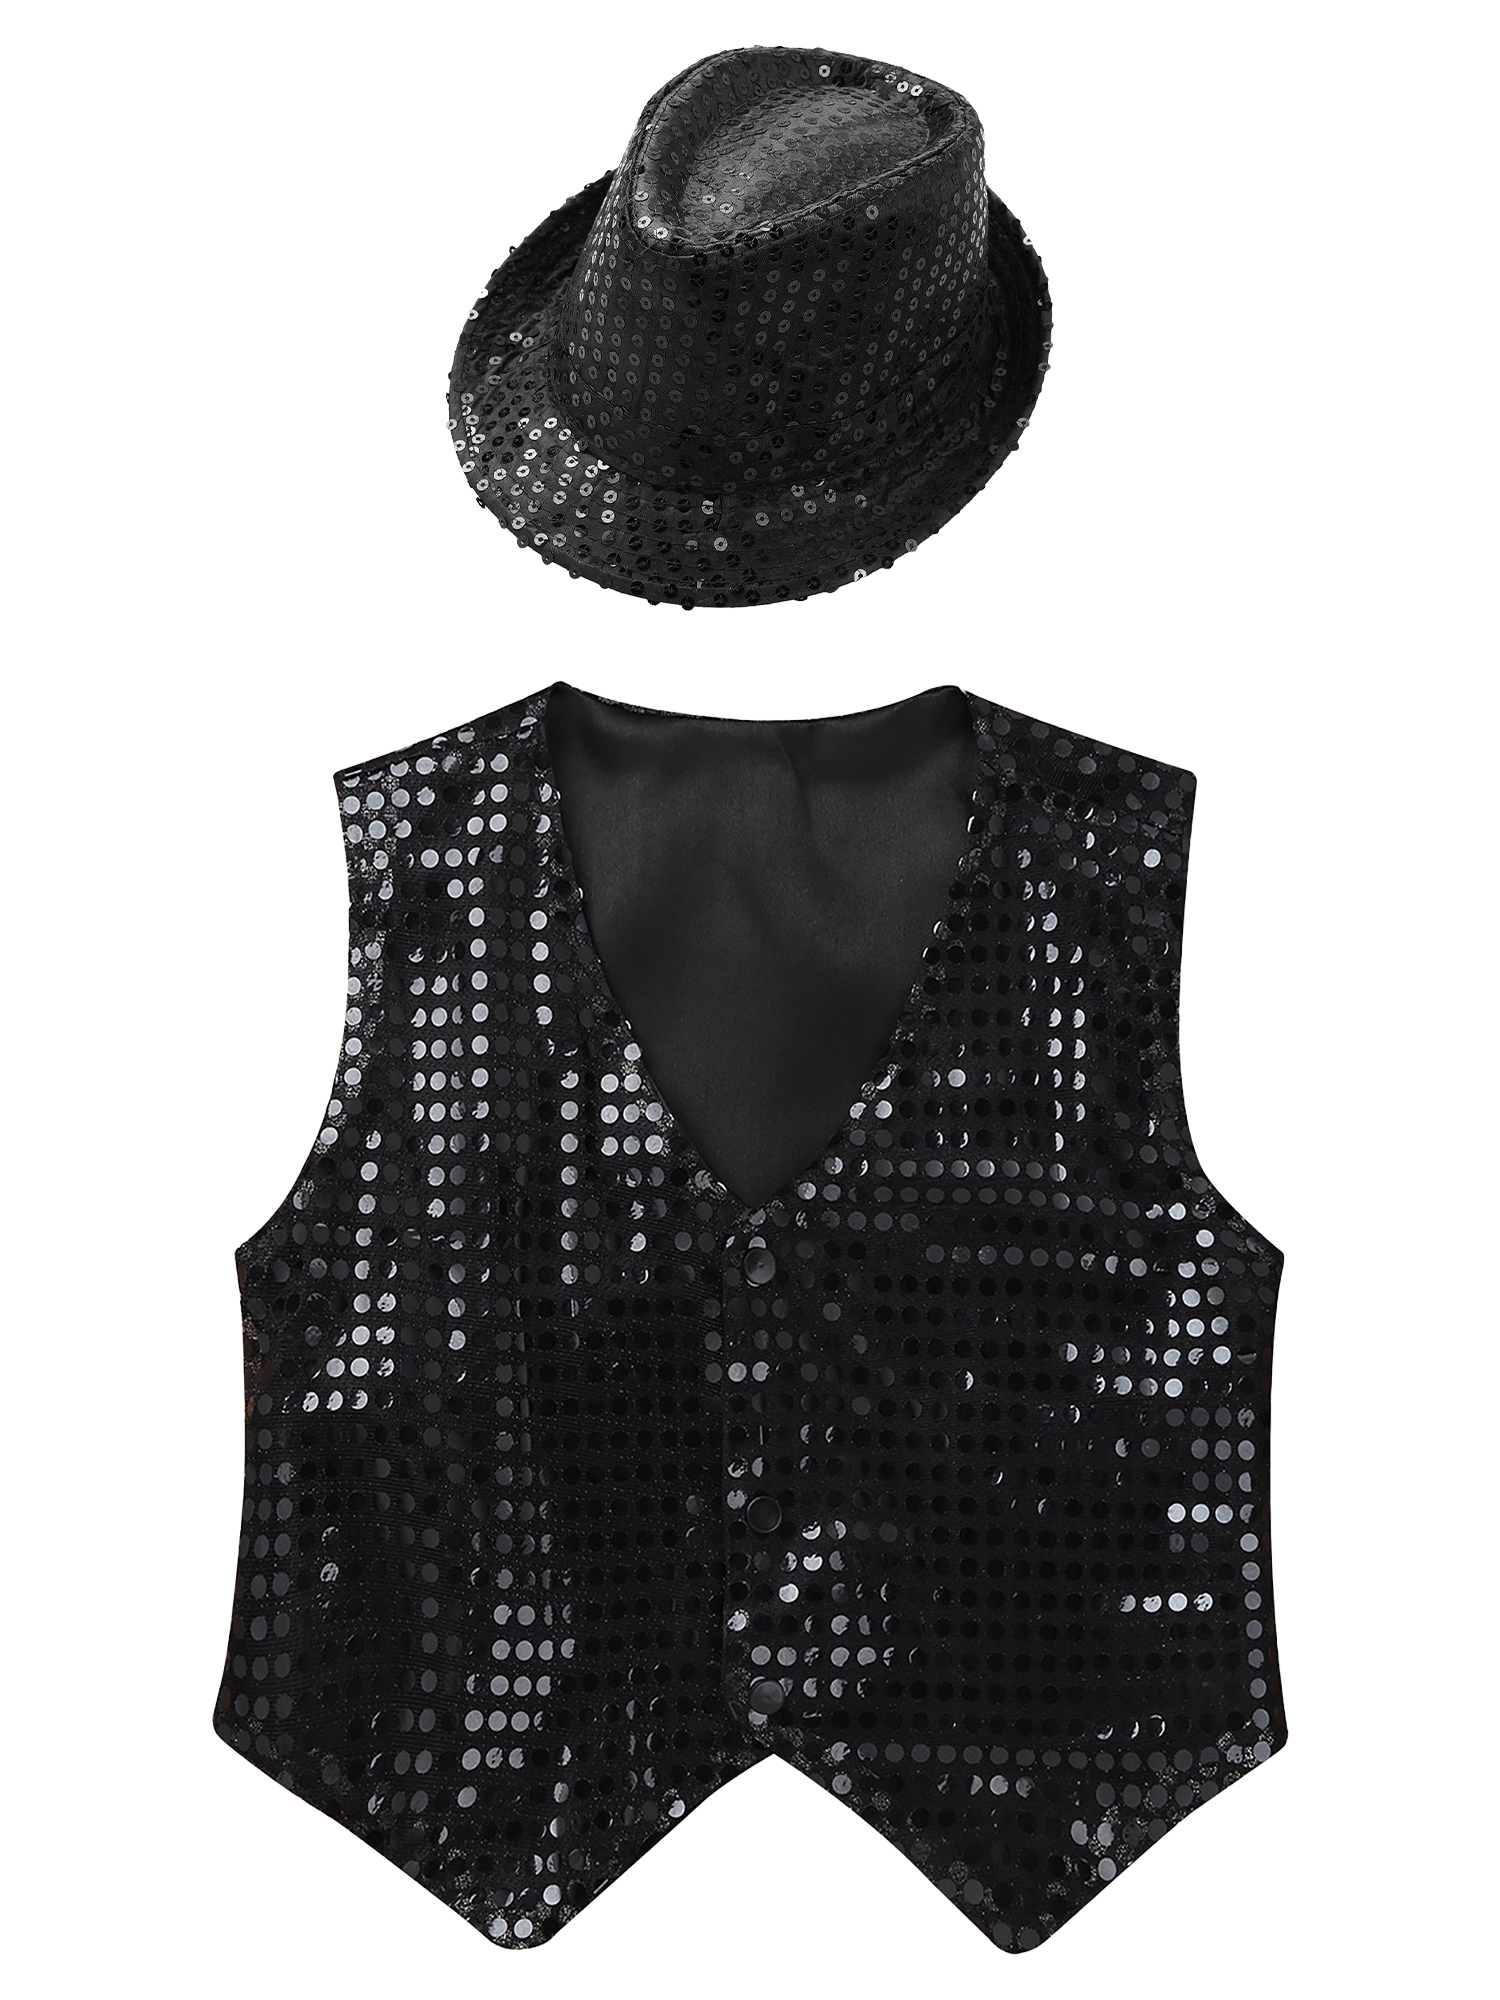 IEFIEL Kids Boys Sparkle Sequins Button Down Vest with Hat Dance Outfit Set Hip Hop Jazz Stage Performance Costume Black 13-14 - image 3 of 7